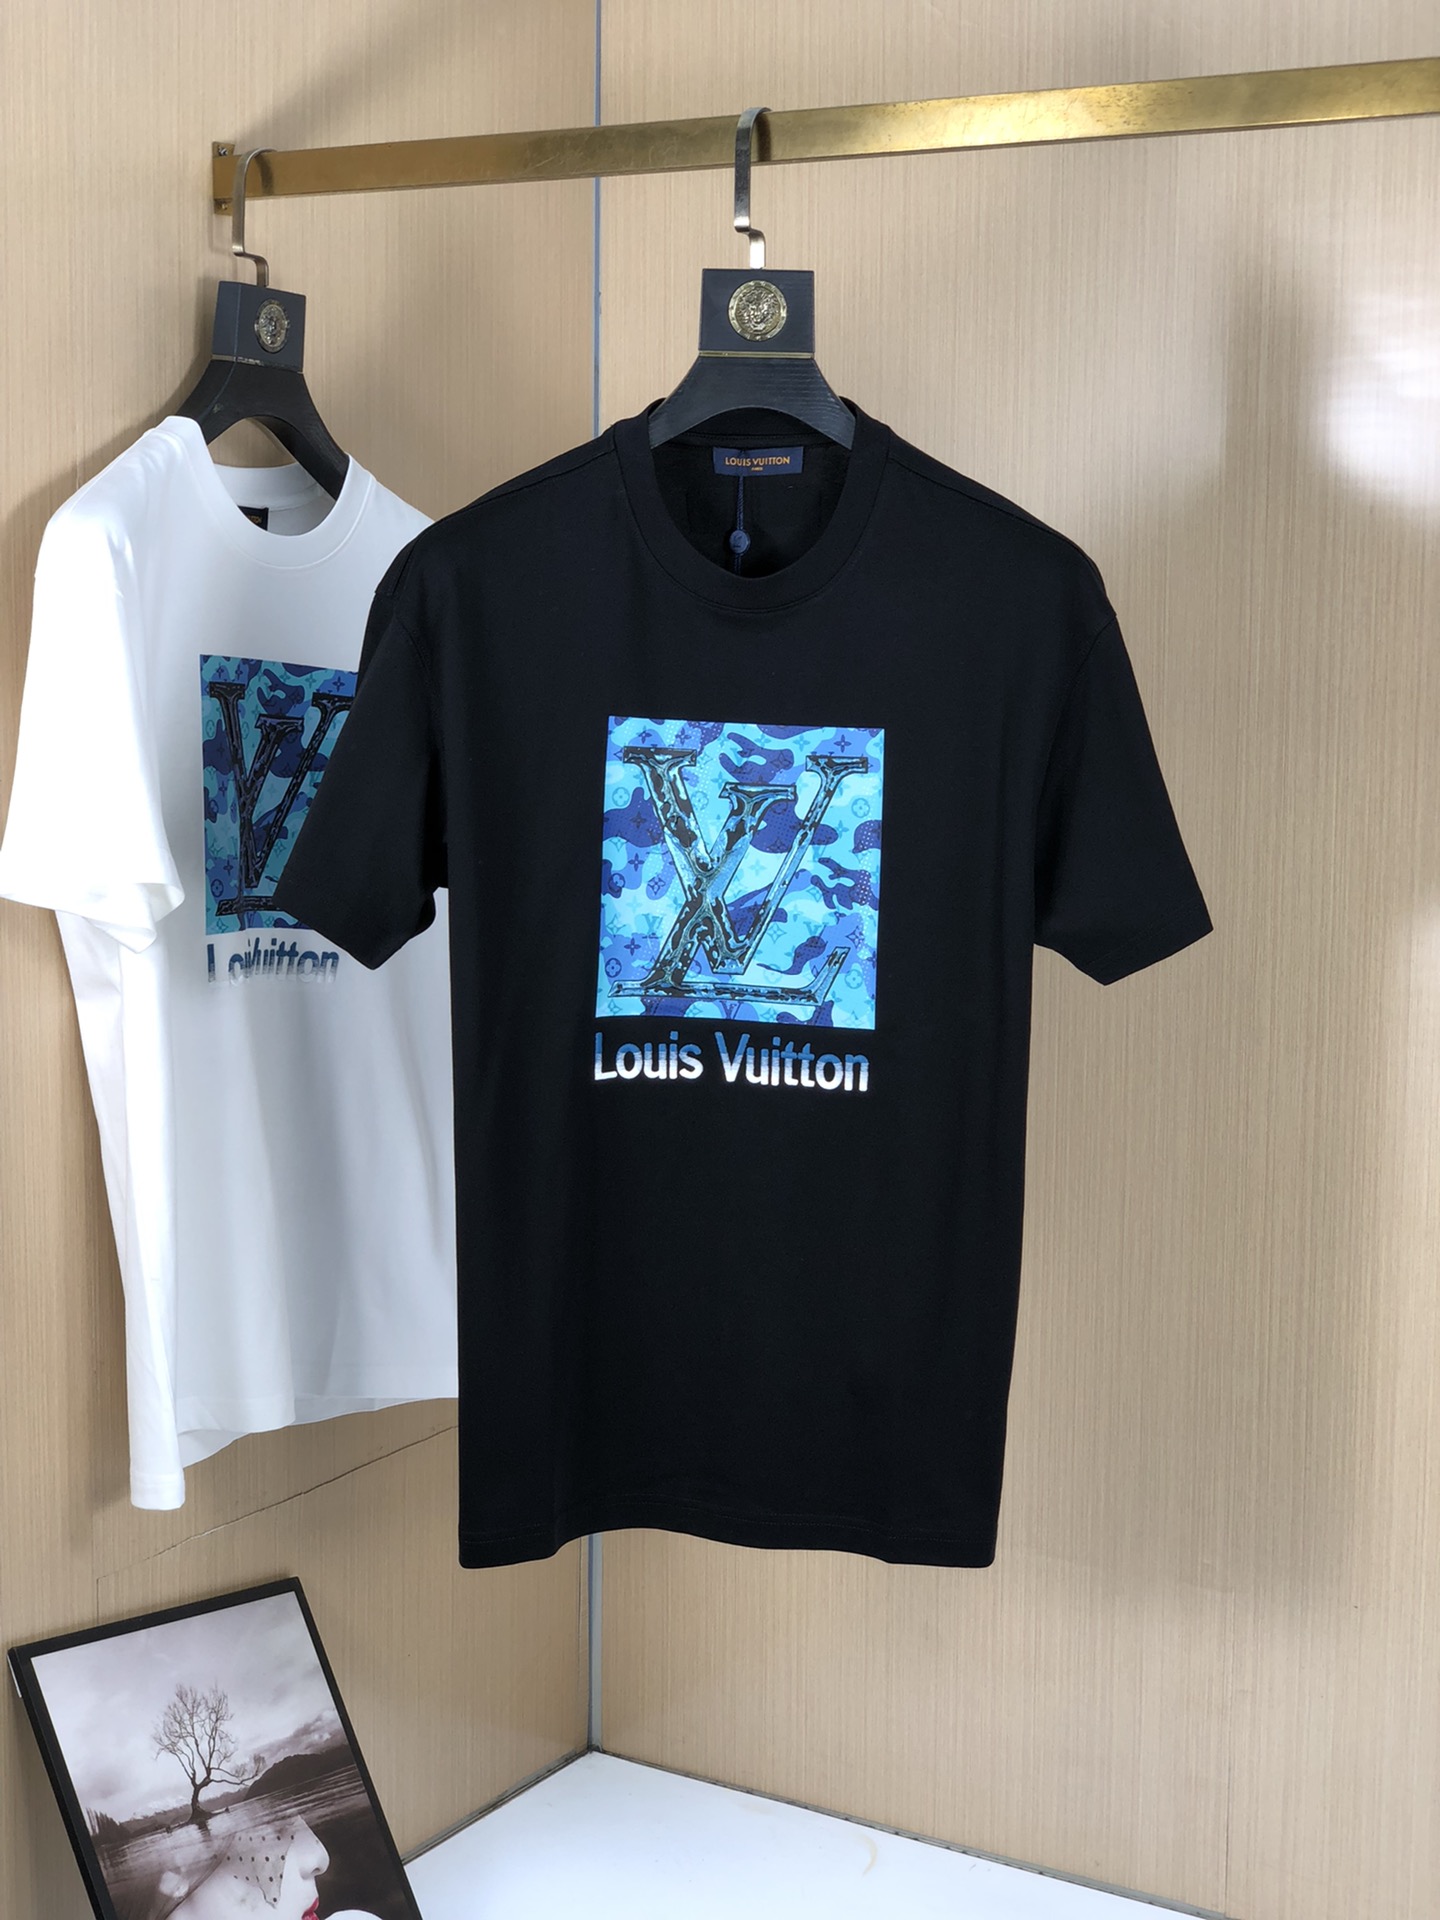 Louis Vuitton Clothing T-Shirt Cotton Fashion Short Sleeve